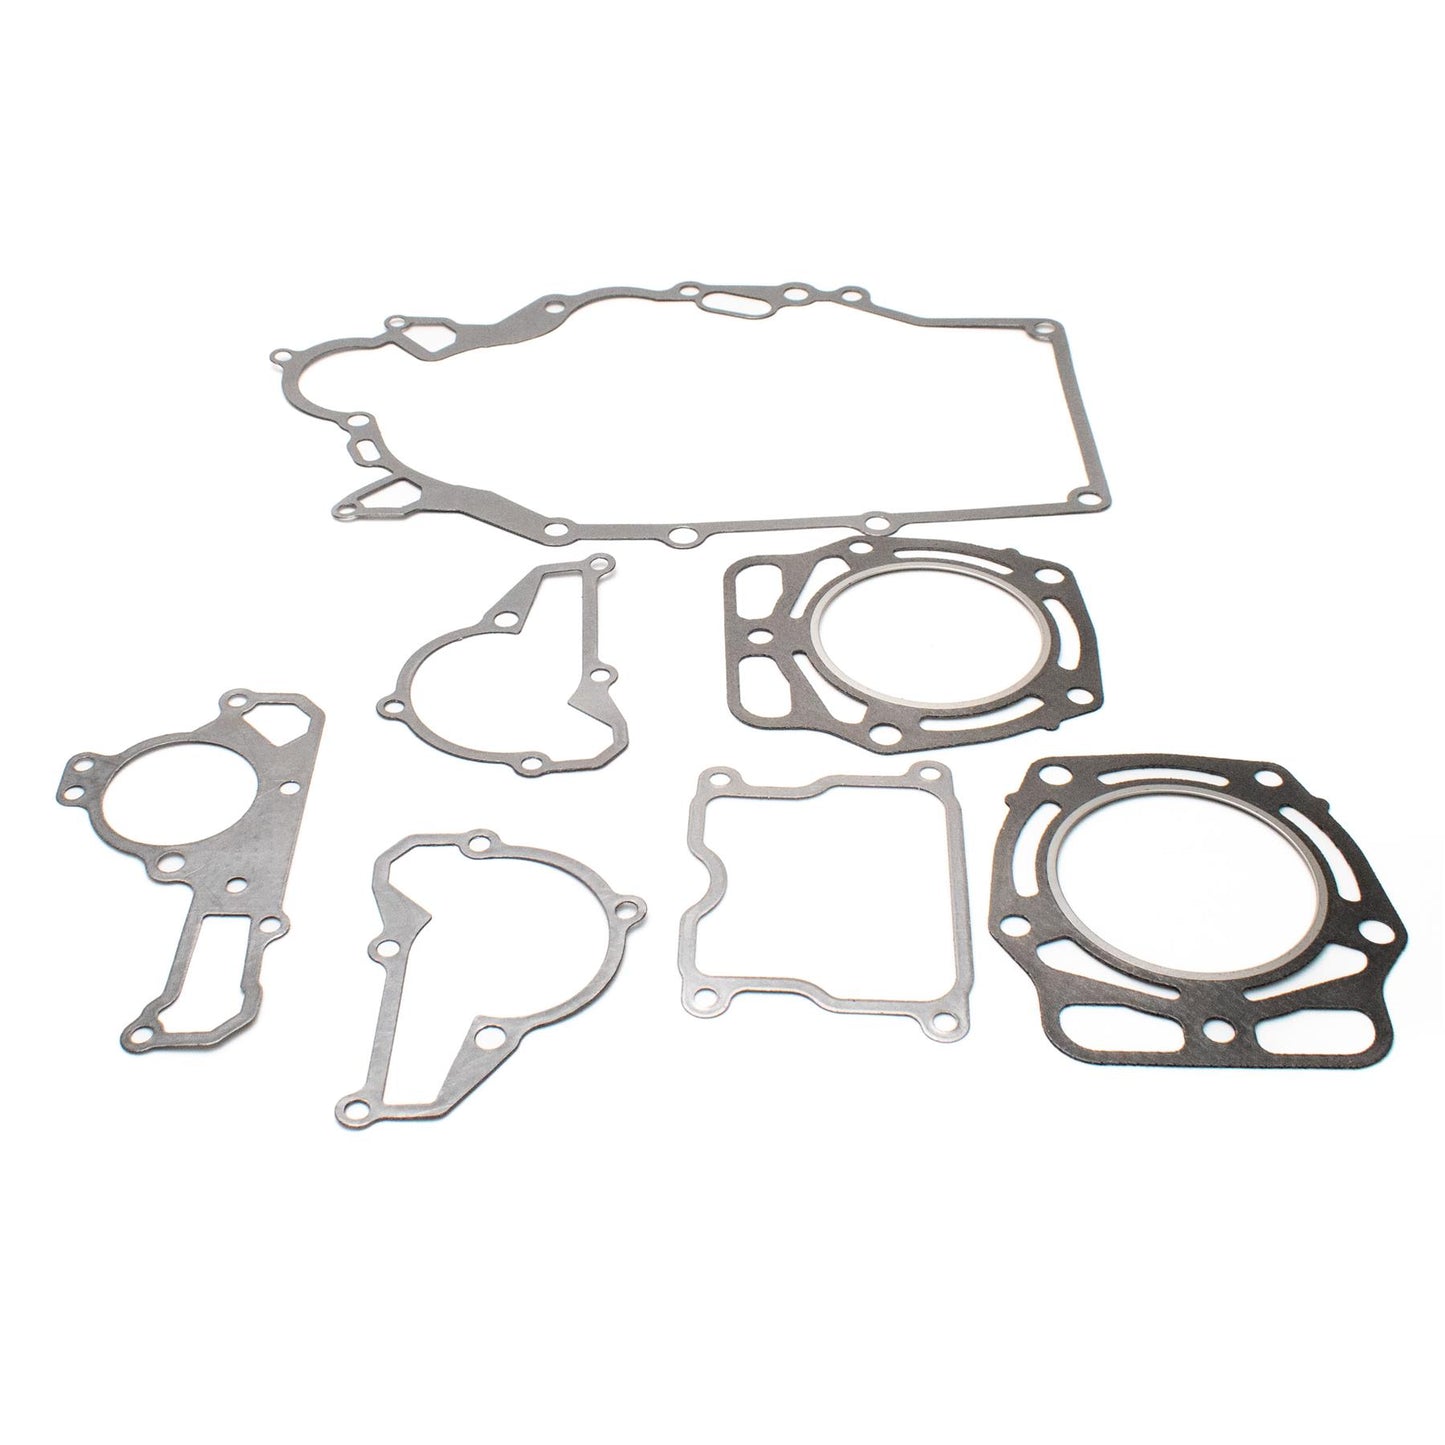 Steel Camshaft Upgrade Kit